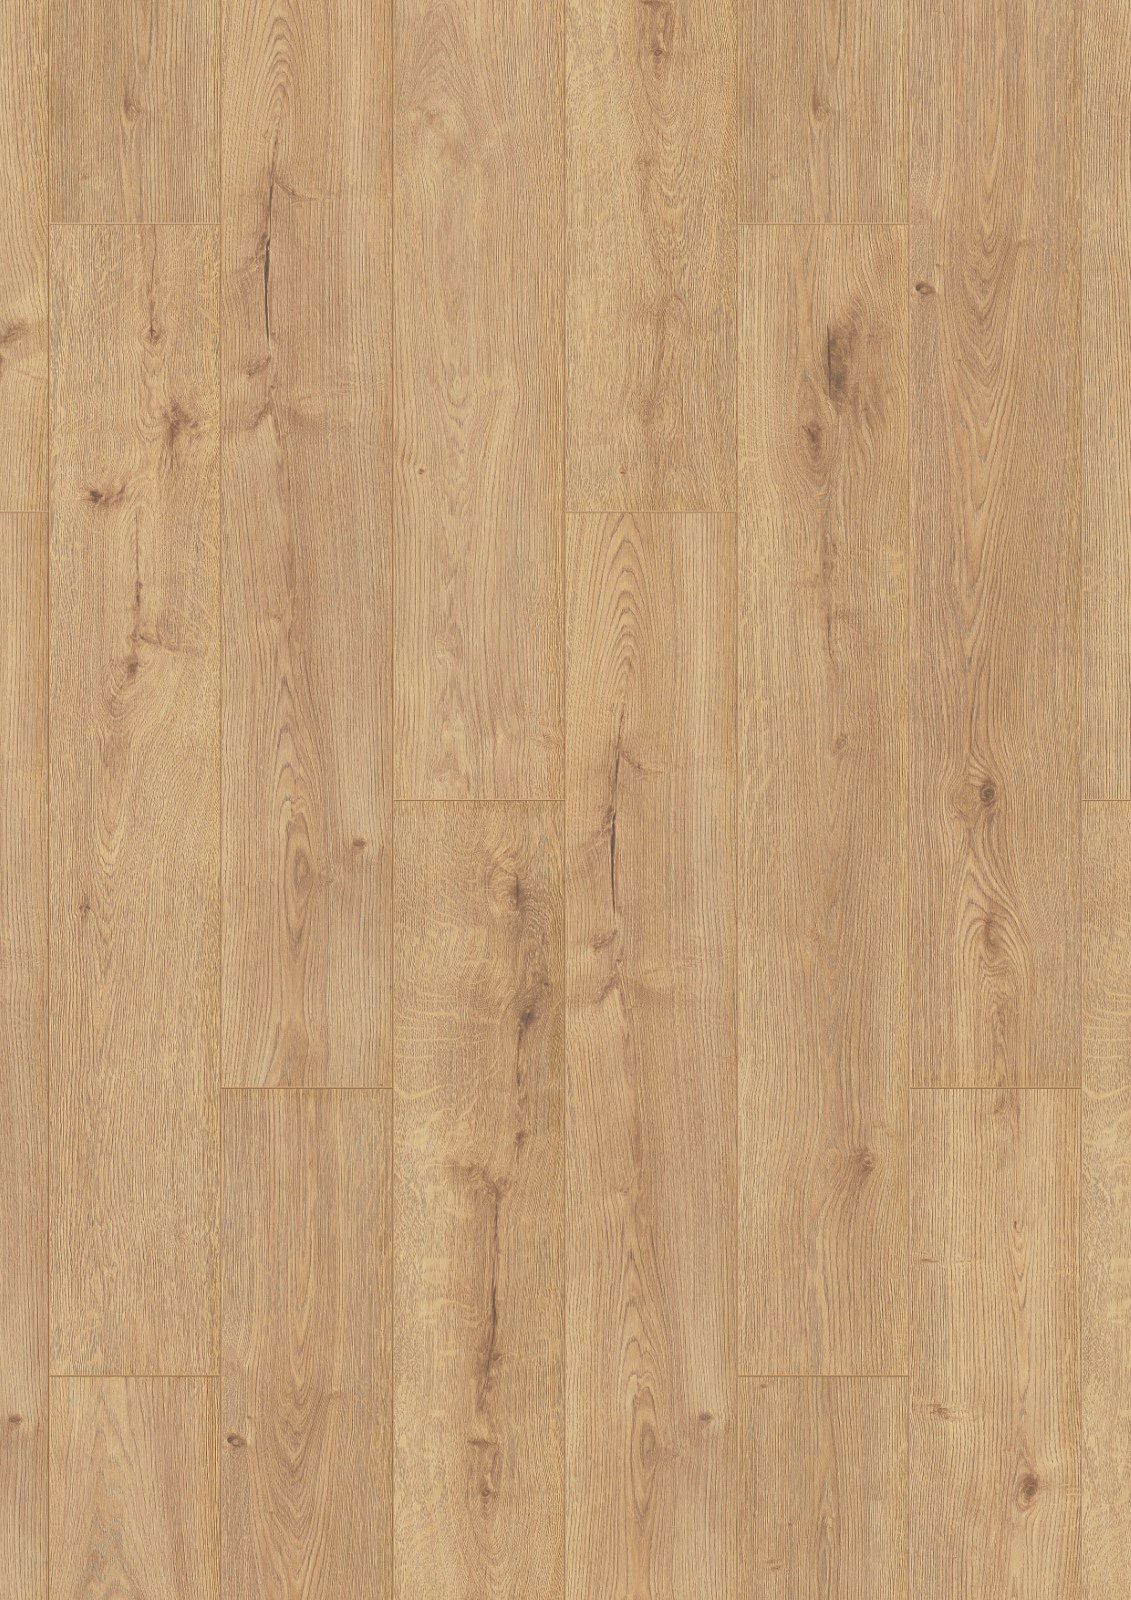 Laminat Planke Holzoptik 1288 x 195 mm mit Klickverbindung Joka Hudson River Normal Plank 6501 Oak summer